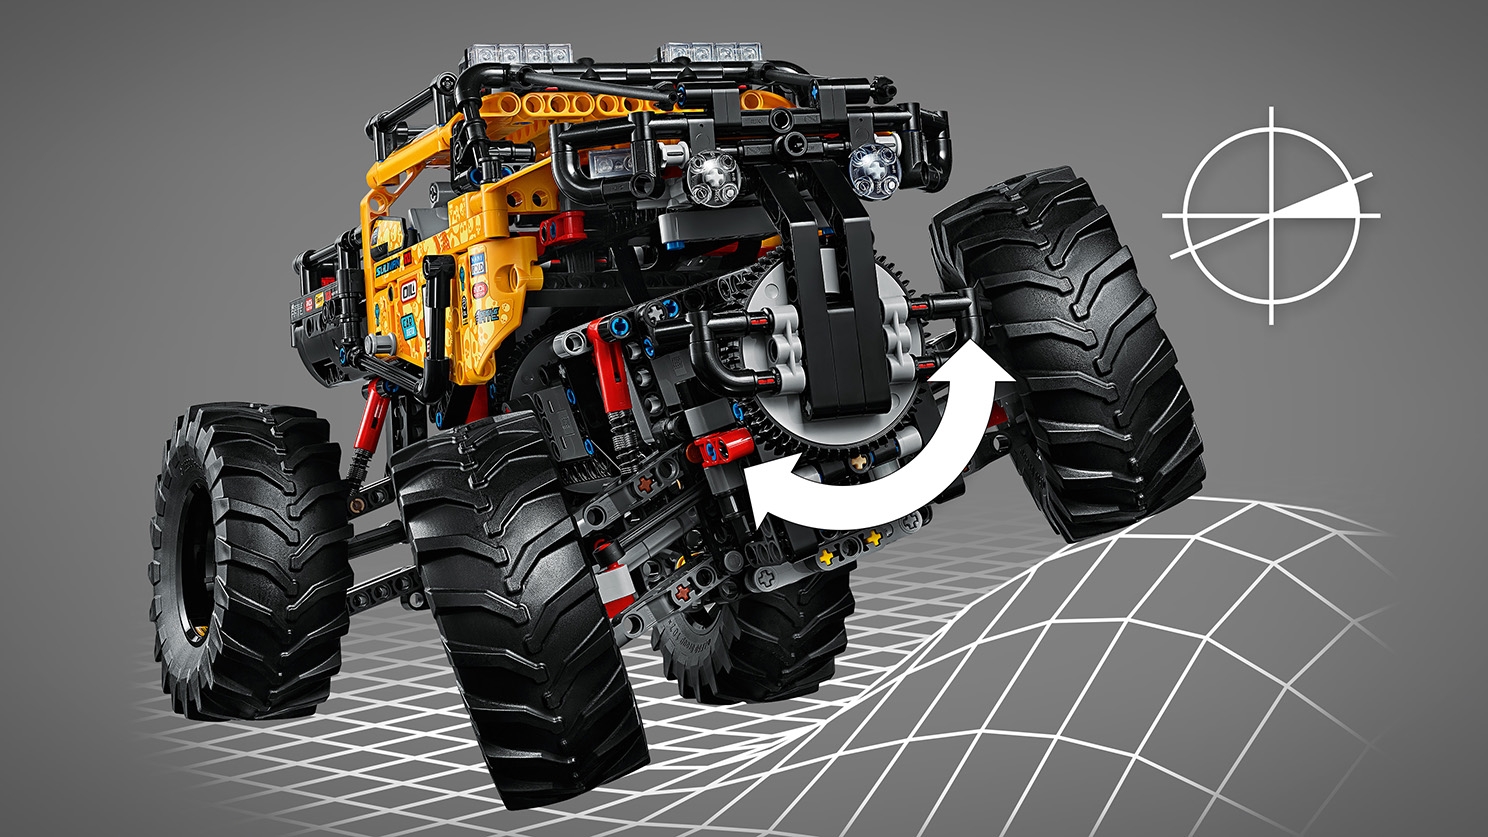 4x4 究極のオフローダー 42099 - レゴ®テクニックセット - LEGO.comキッズ